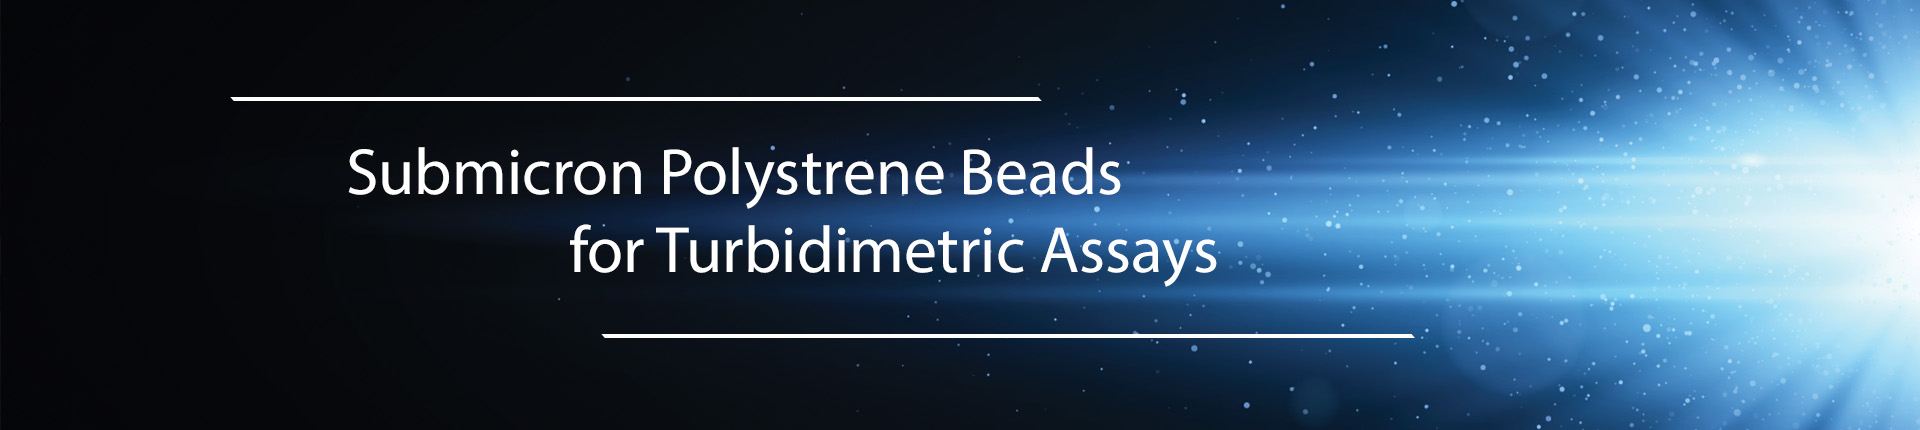 Submicron Polystrene Beads for Turbidimetric Assays